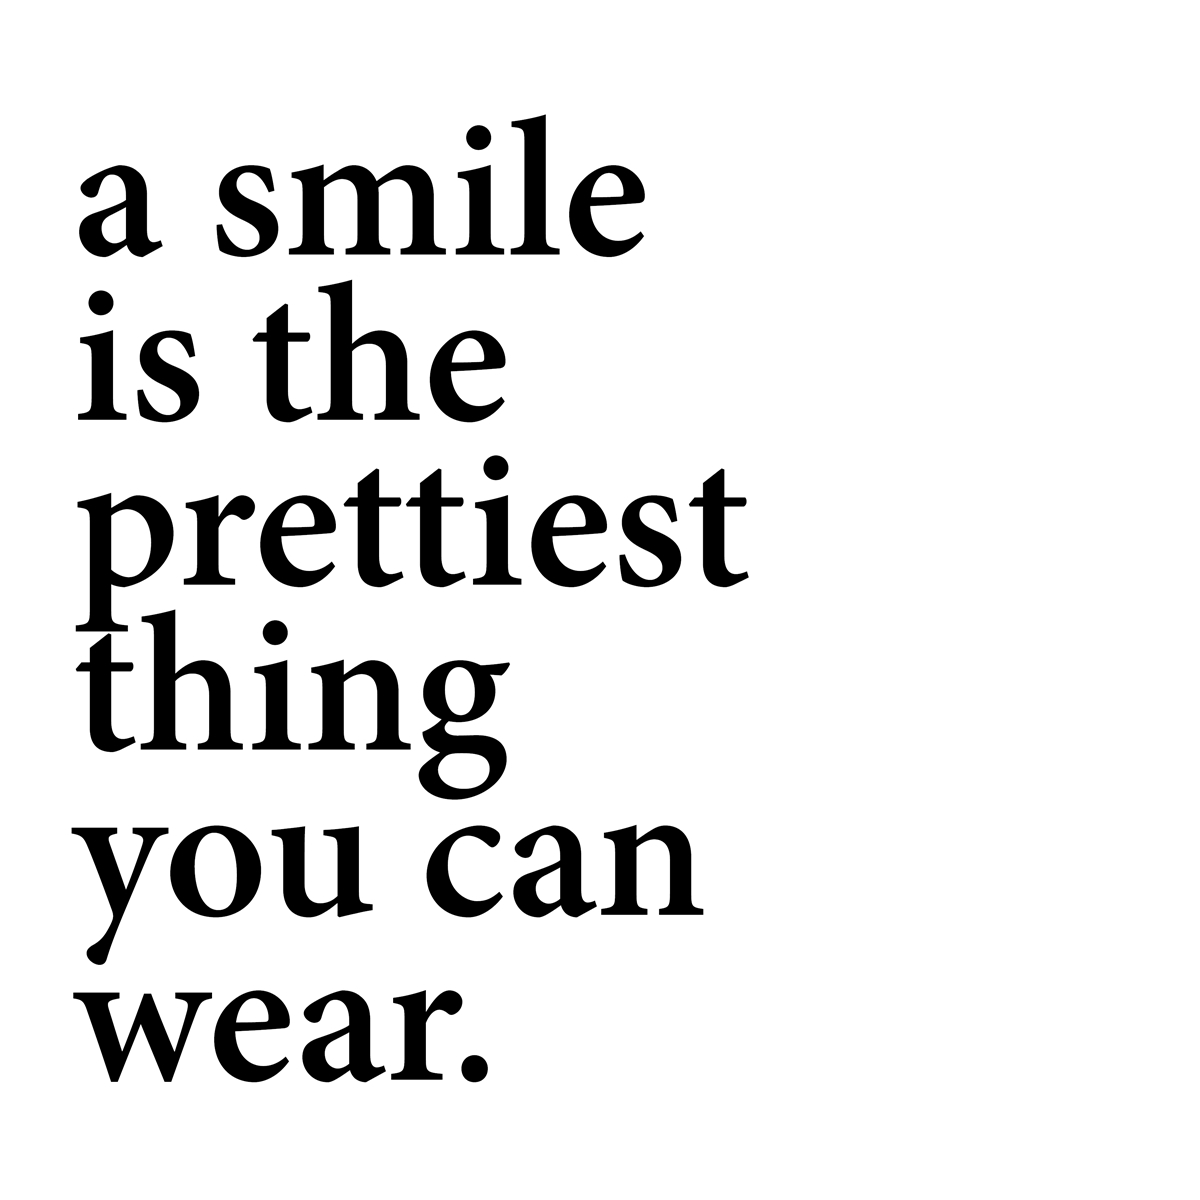 Need help with a pretty #smile? 😁

✅ Porcelain Veneers
✅ Composite Veneers
✅ Invisalign
✅ Teeth Whitening
✅ Smile Makeovers

#drjamesmalouf #maloufdental #cosmeticdentist #dentalveneers #porcelainveneers #compositeveneers #smilerestoration #dentalcrowns #teethwhitening